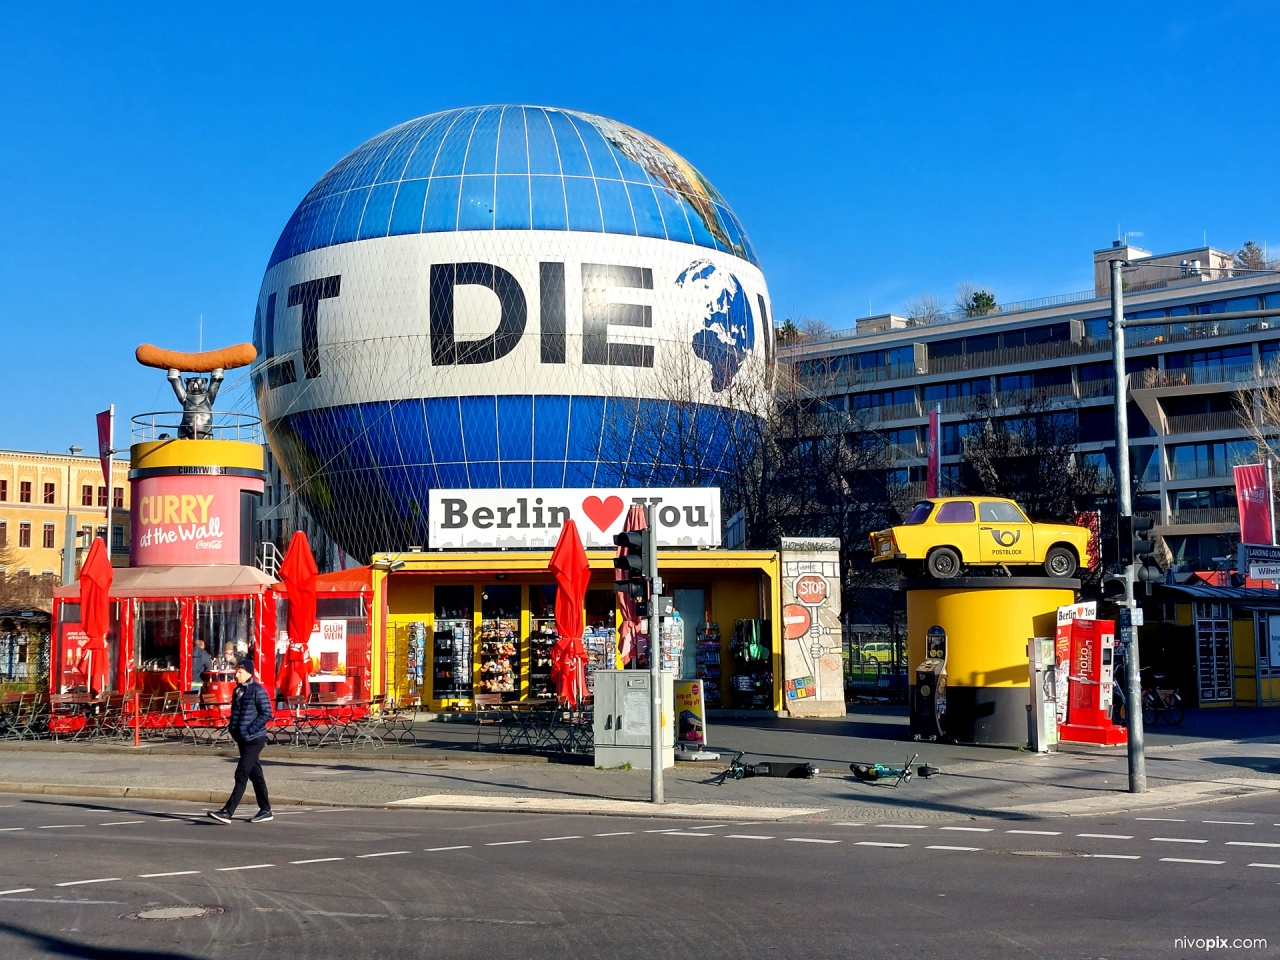 Berliner Weltballon